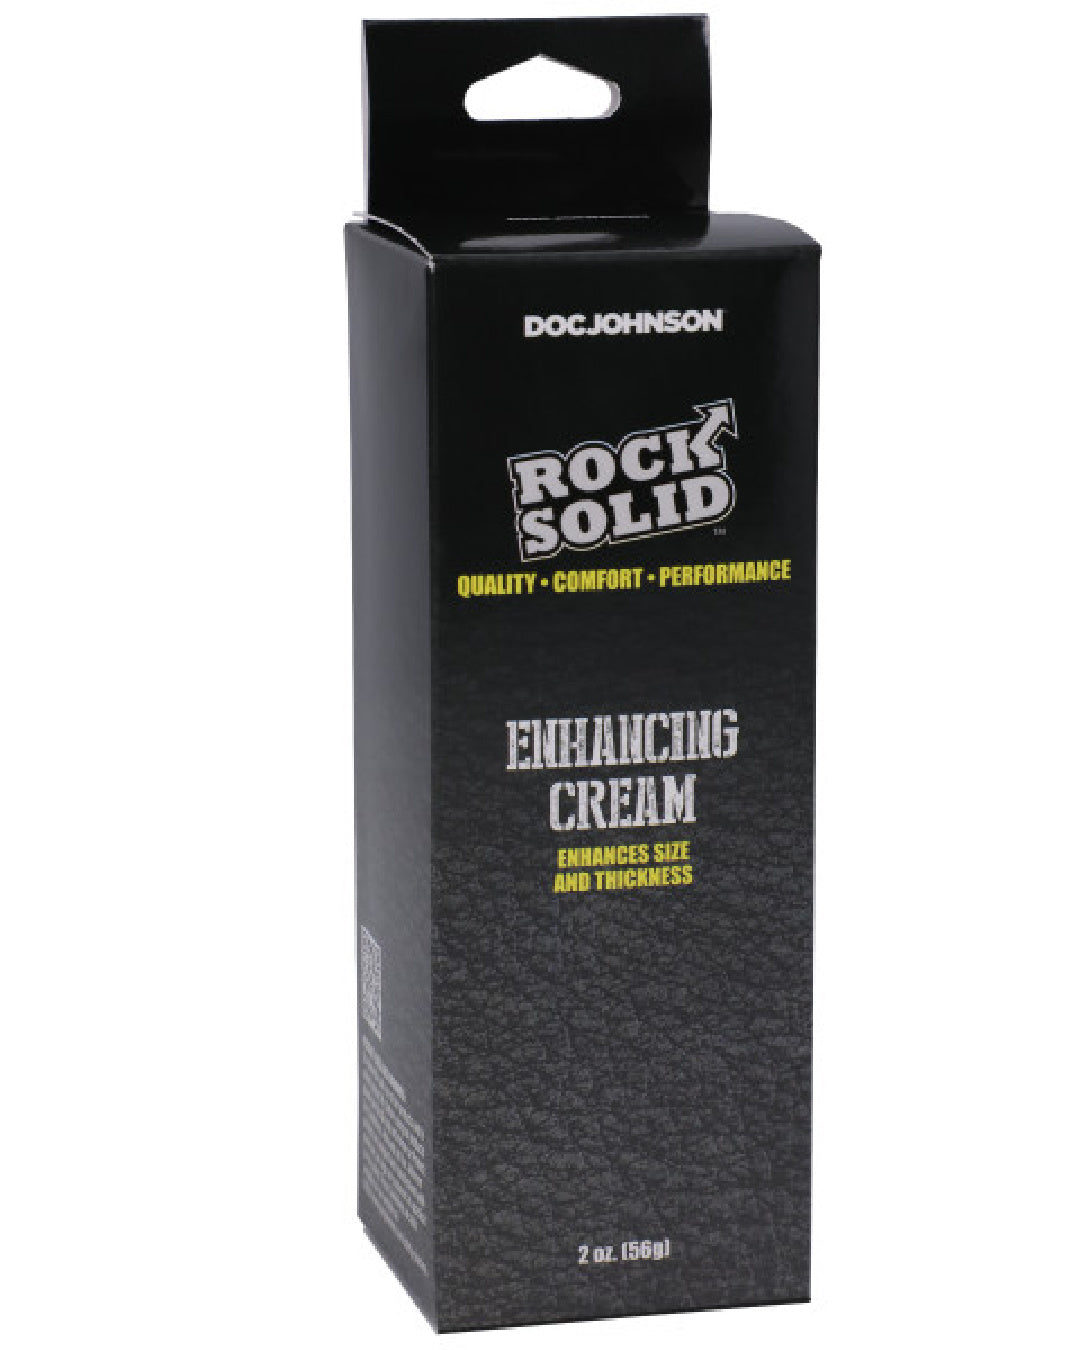 Rock Solid Erection Enhancing Cream - 2oz box 